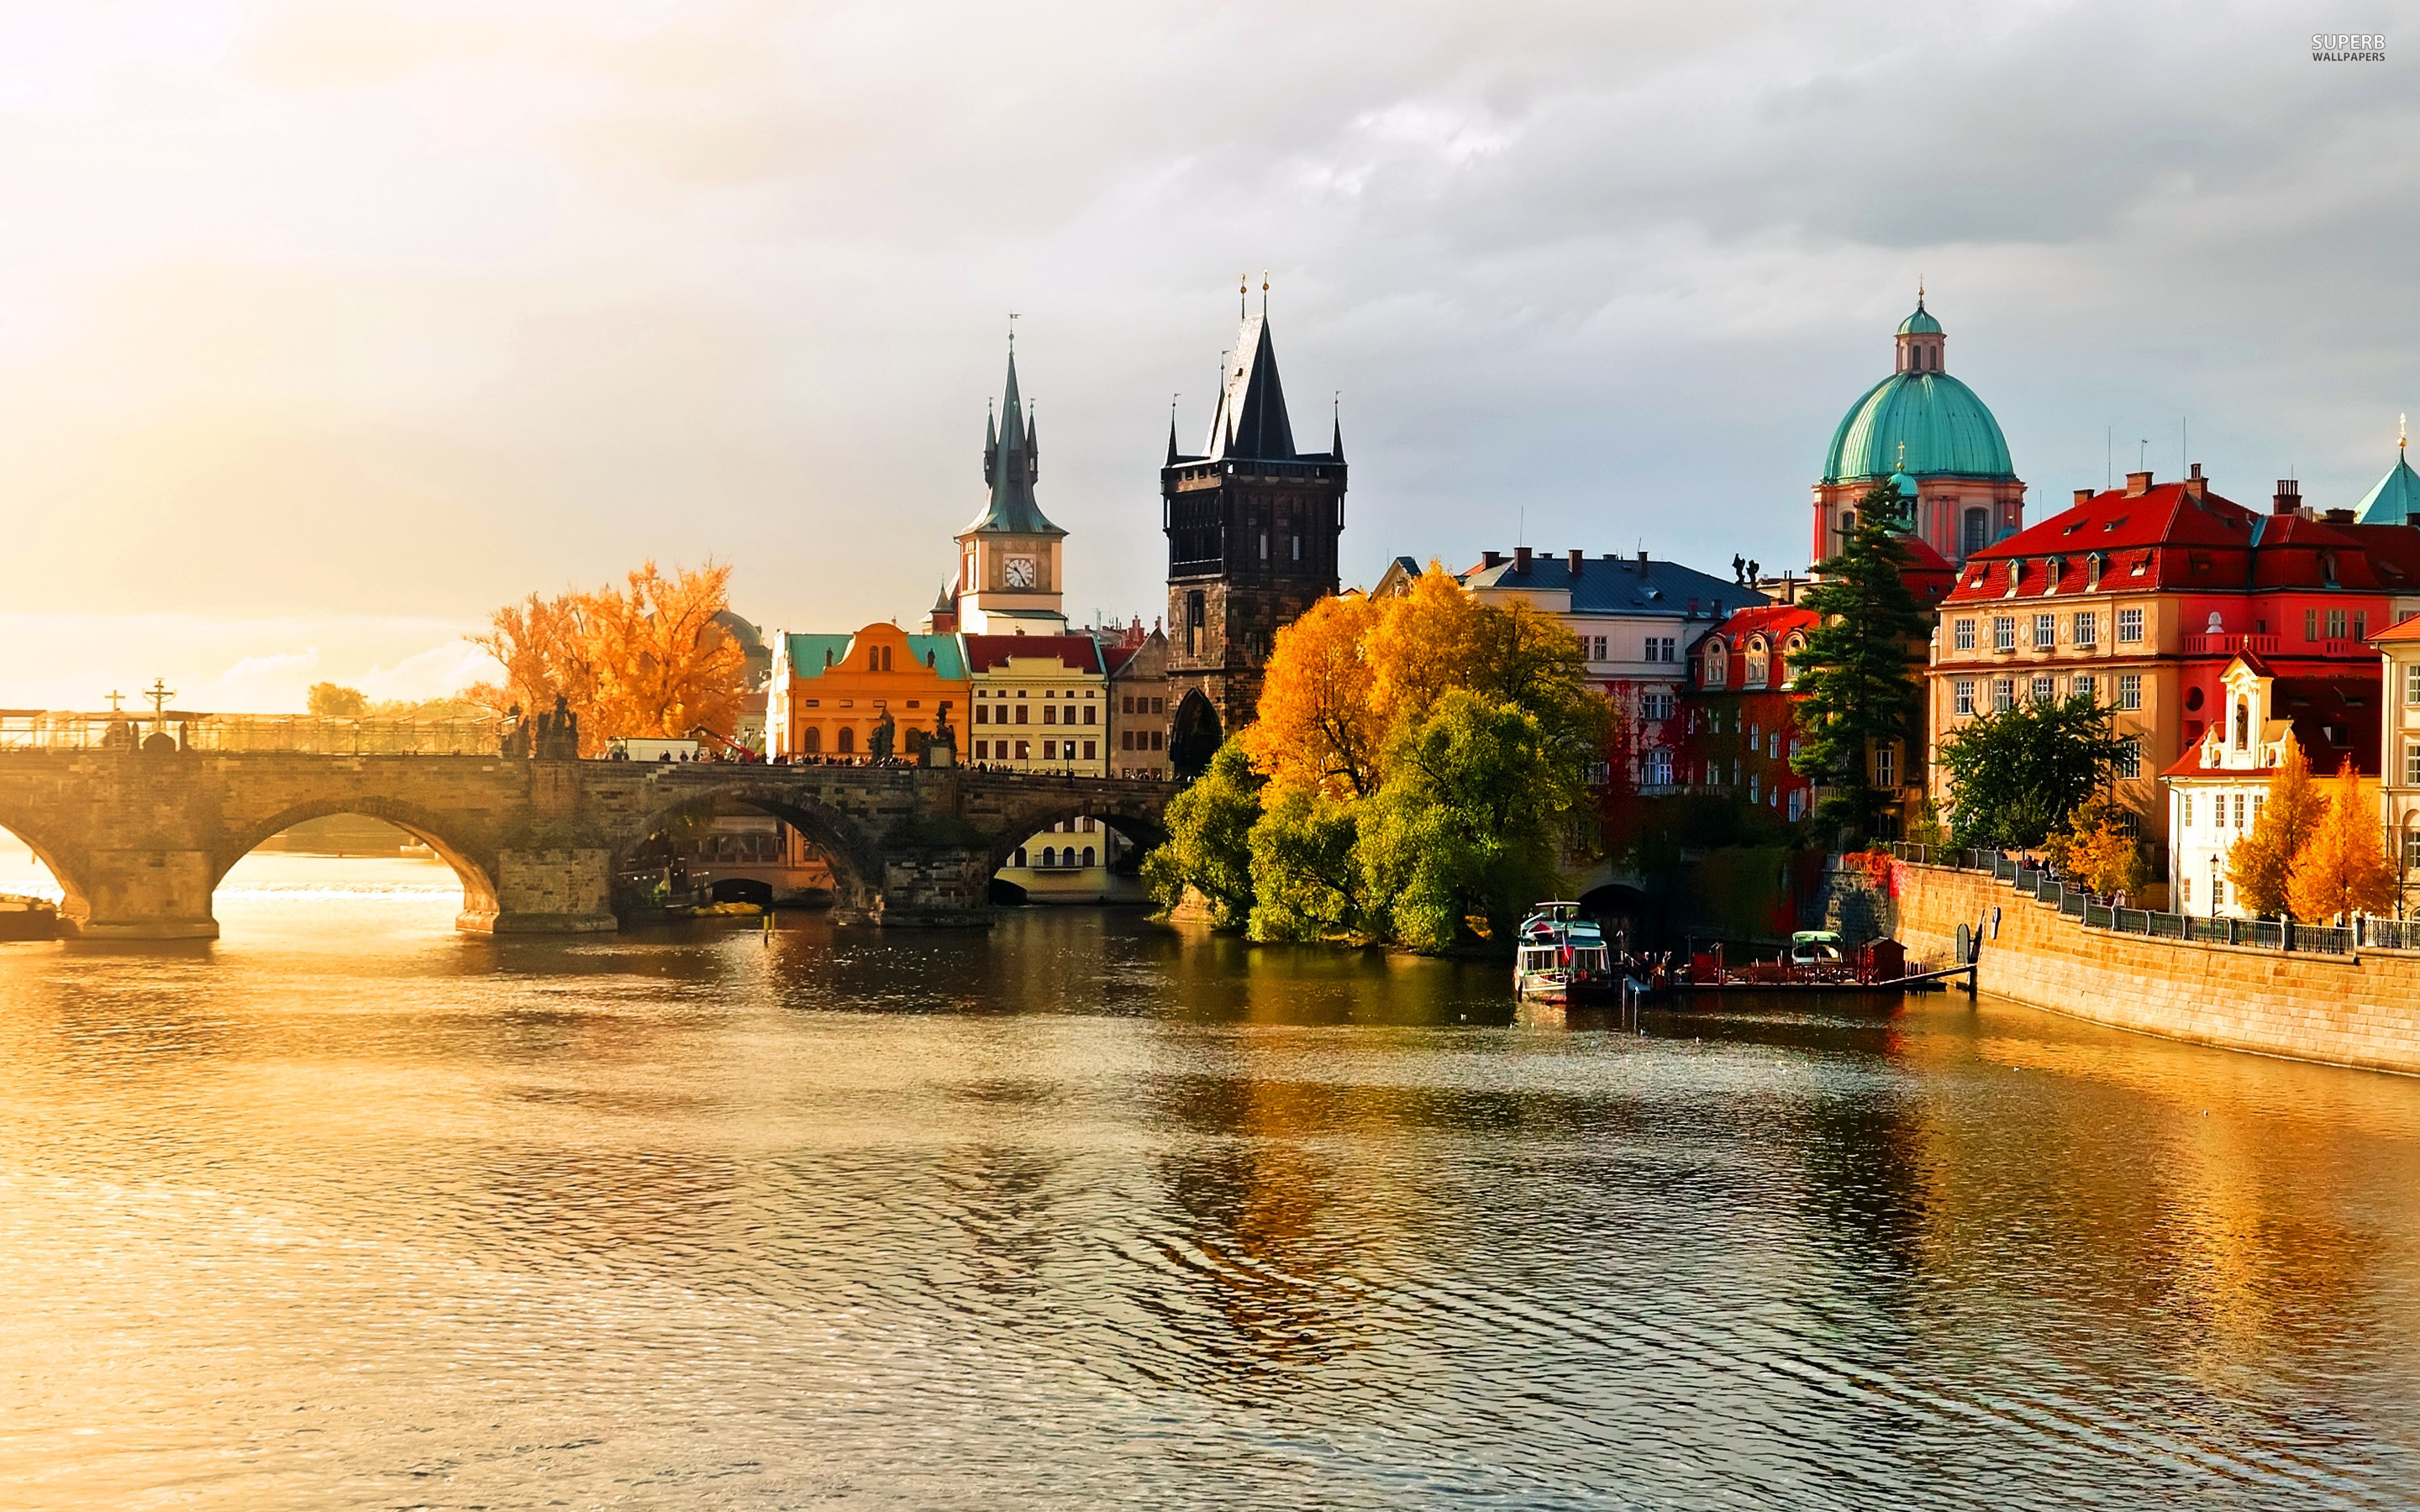 Czech Republic is an amazing place you definitely should visit.